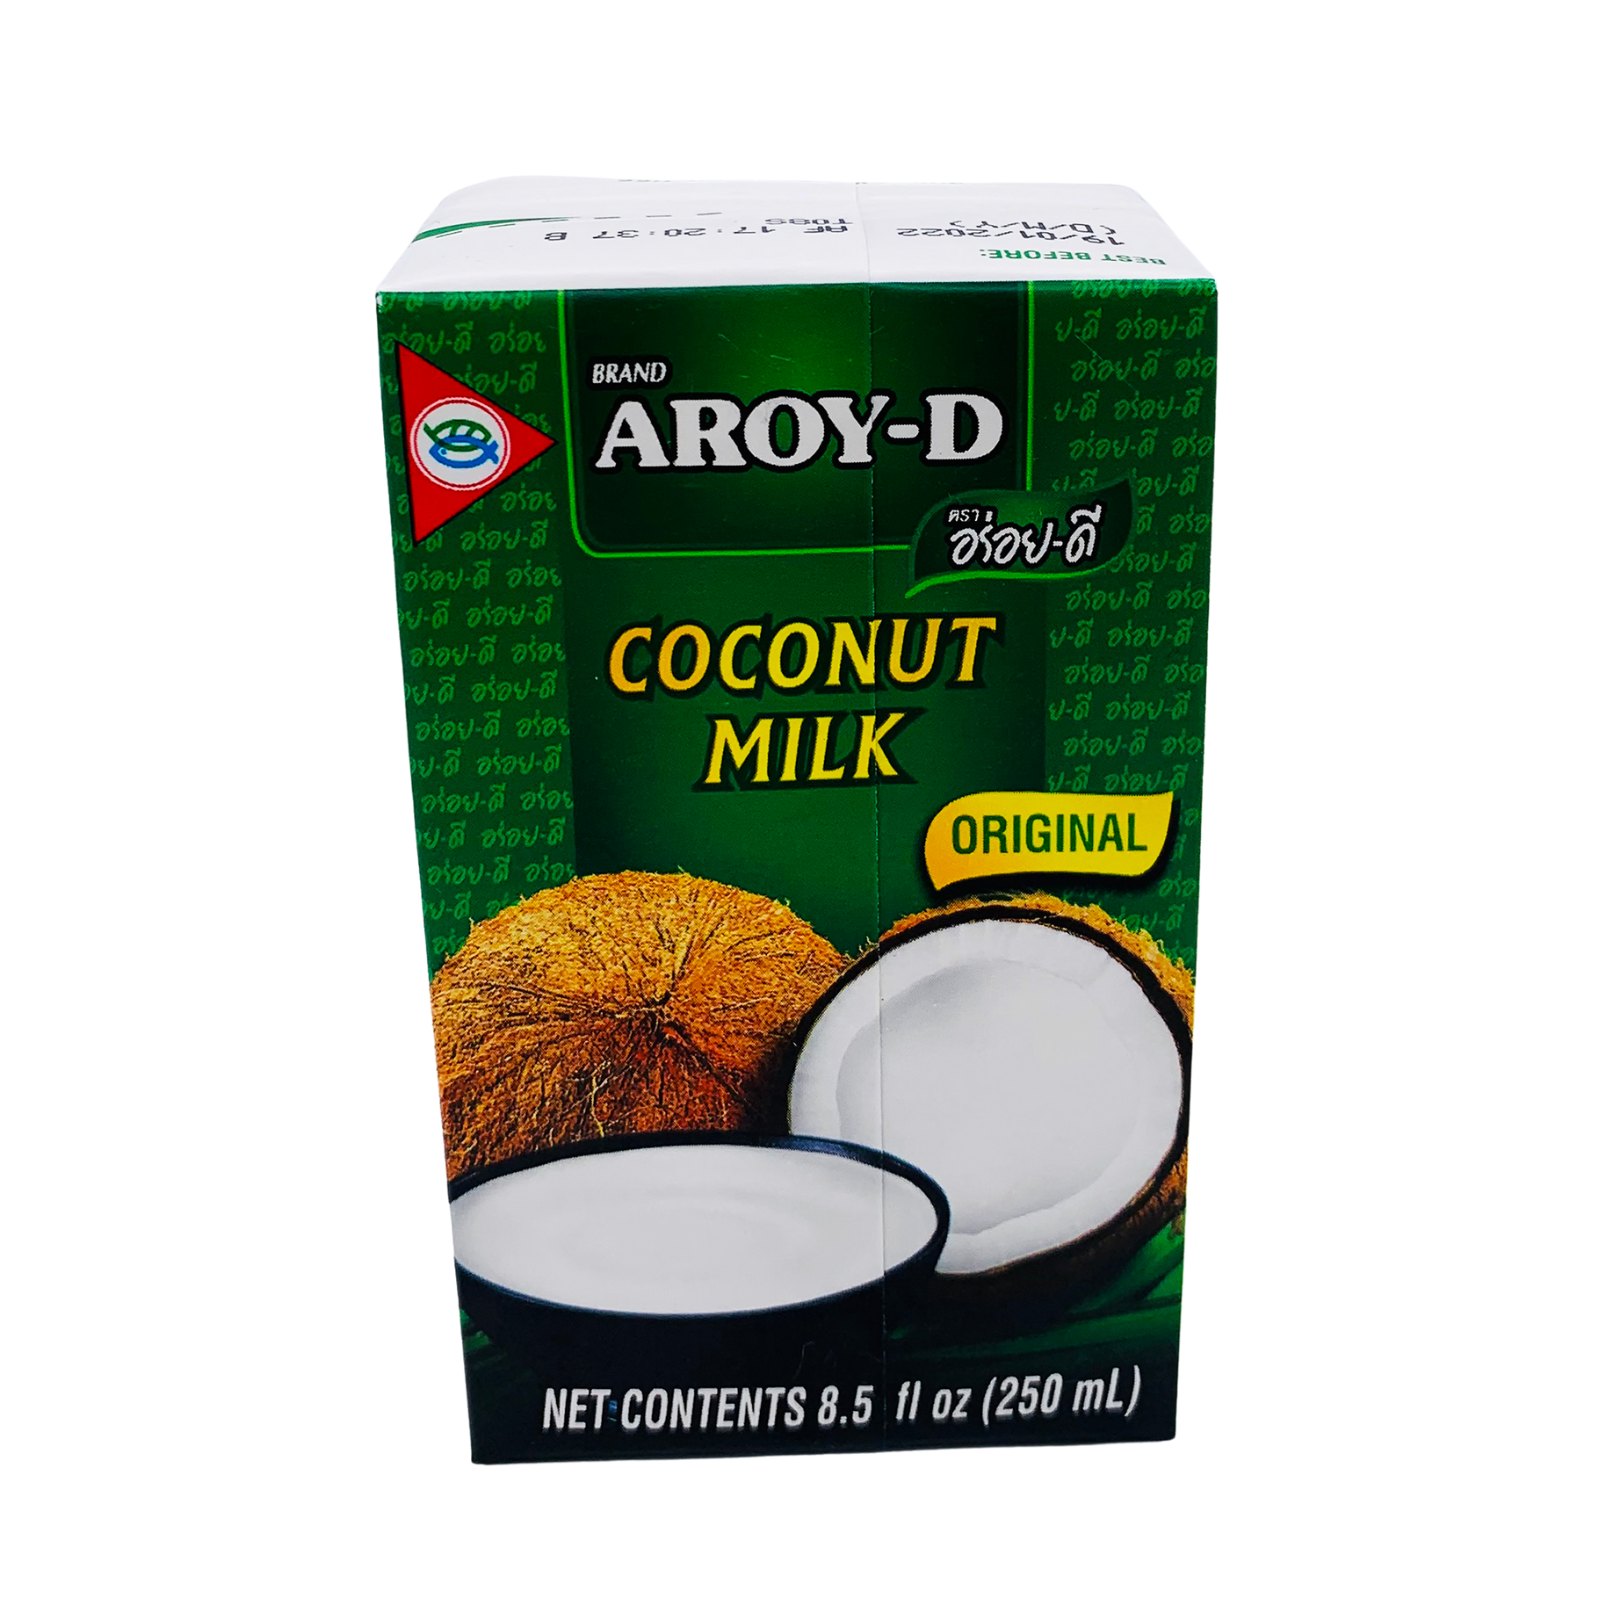 Thai Coconut Milk 250ml Carton by Aroy-D